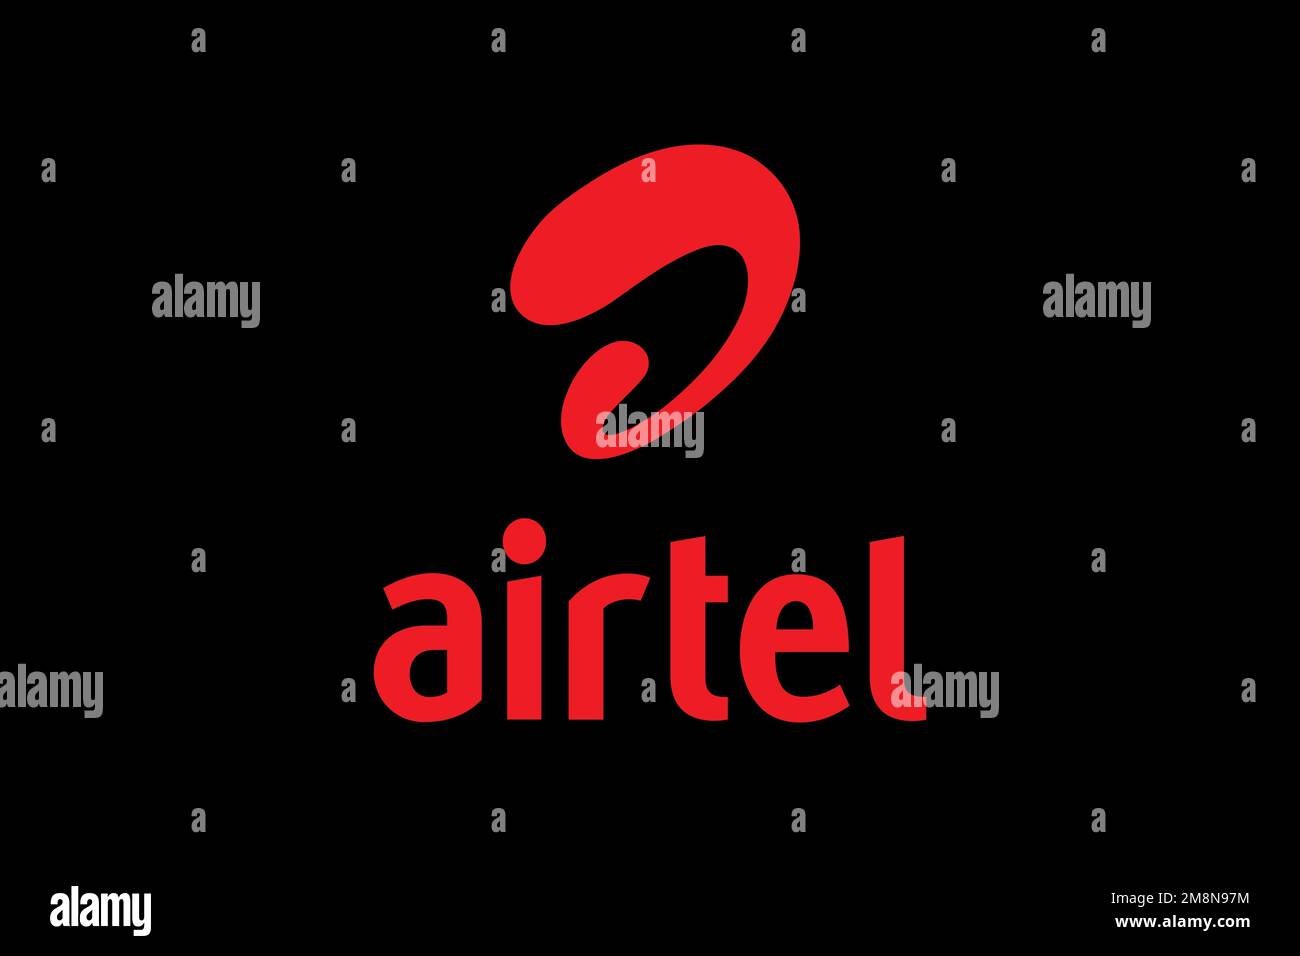 Airtel Logo Wallpapers